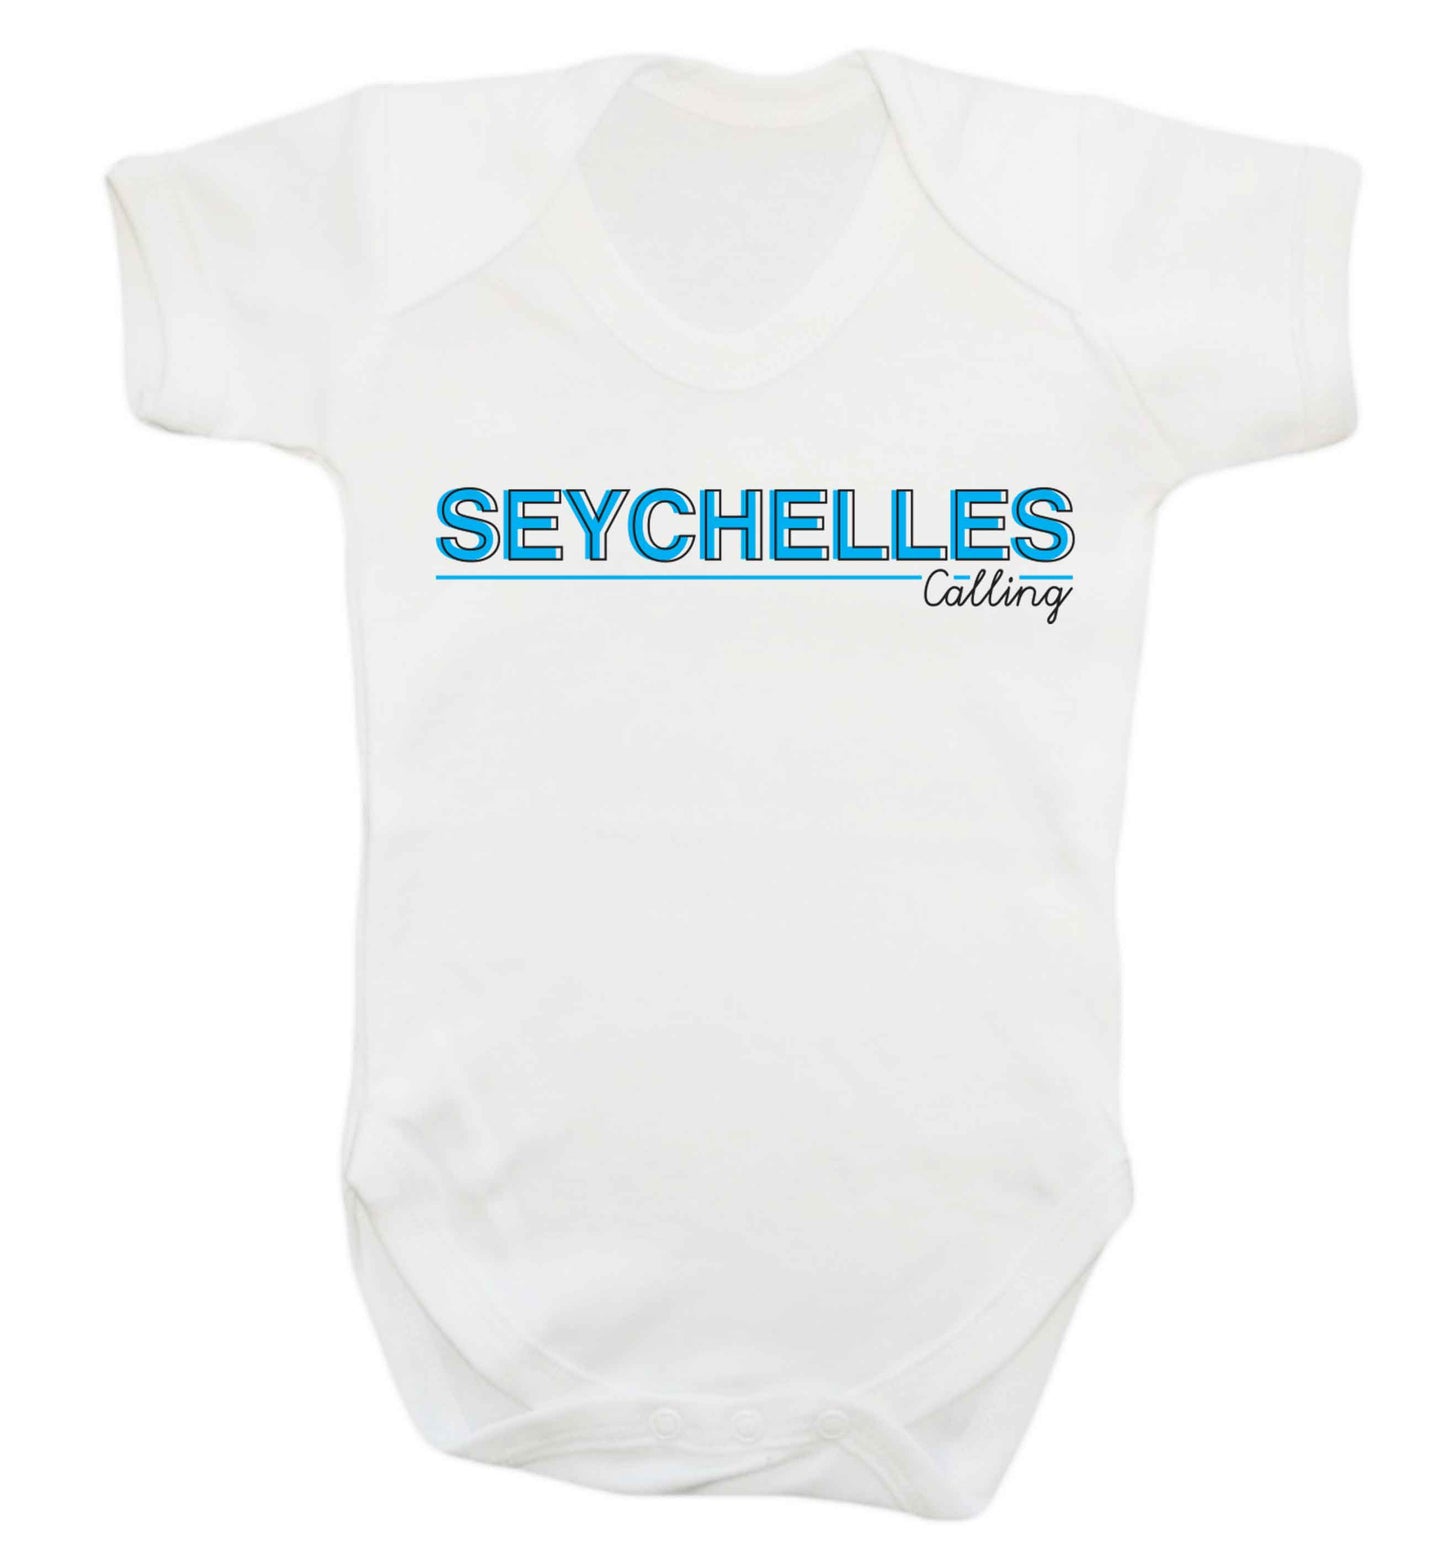 Seychelles calling Baby Vest white 18-24 months